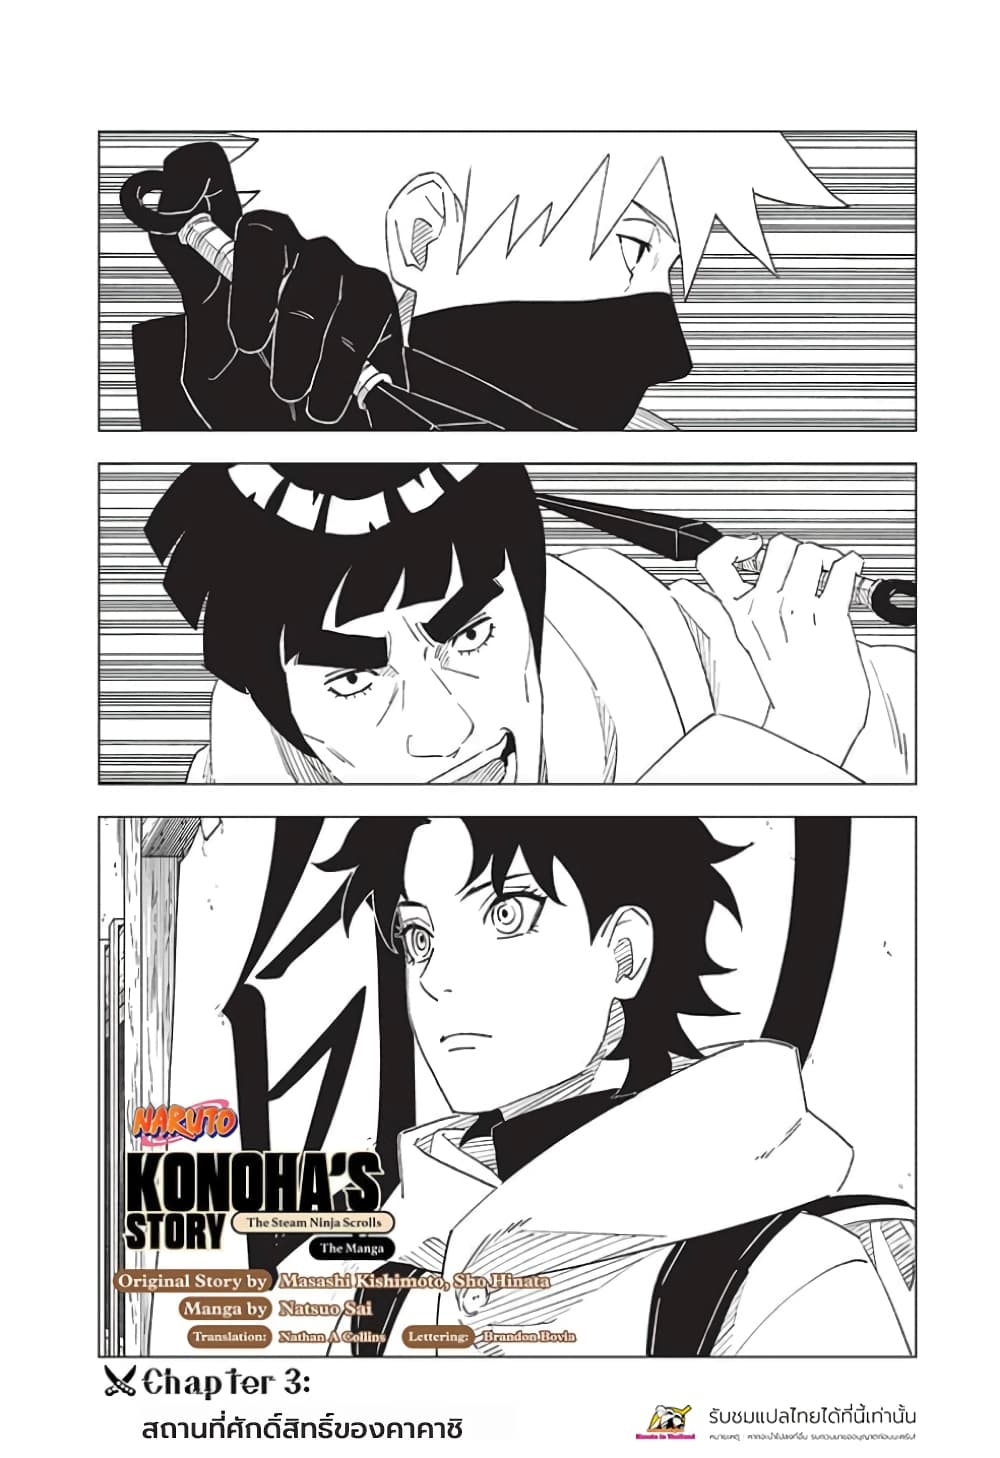 Naruto Konoha’s Story – The Steam Ninja Scrolls The Manga ตอนที่ 3 (1)